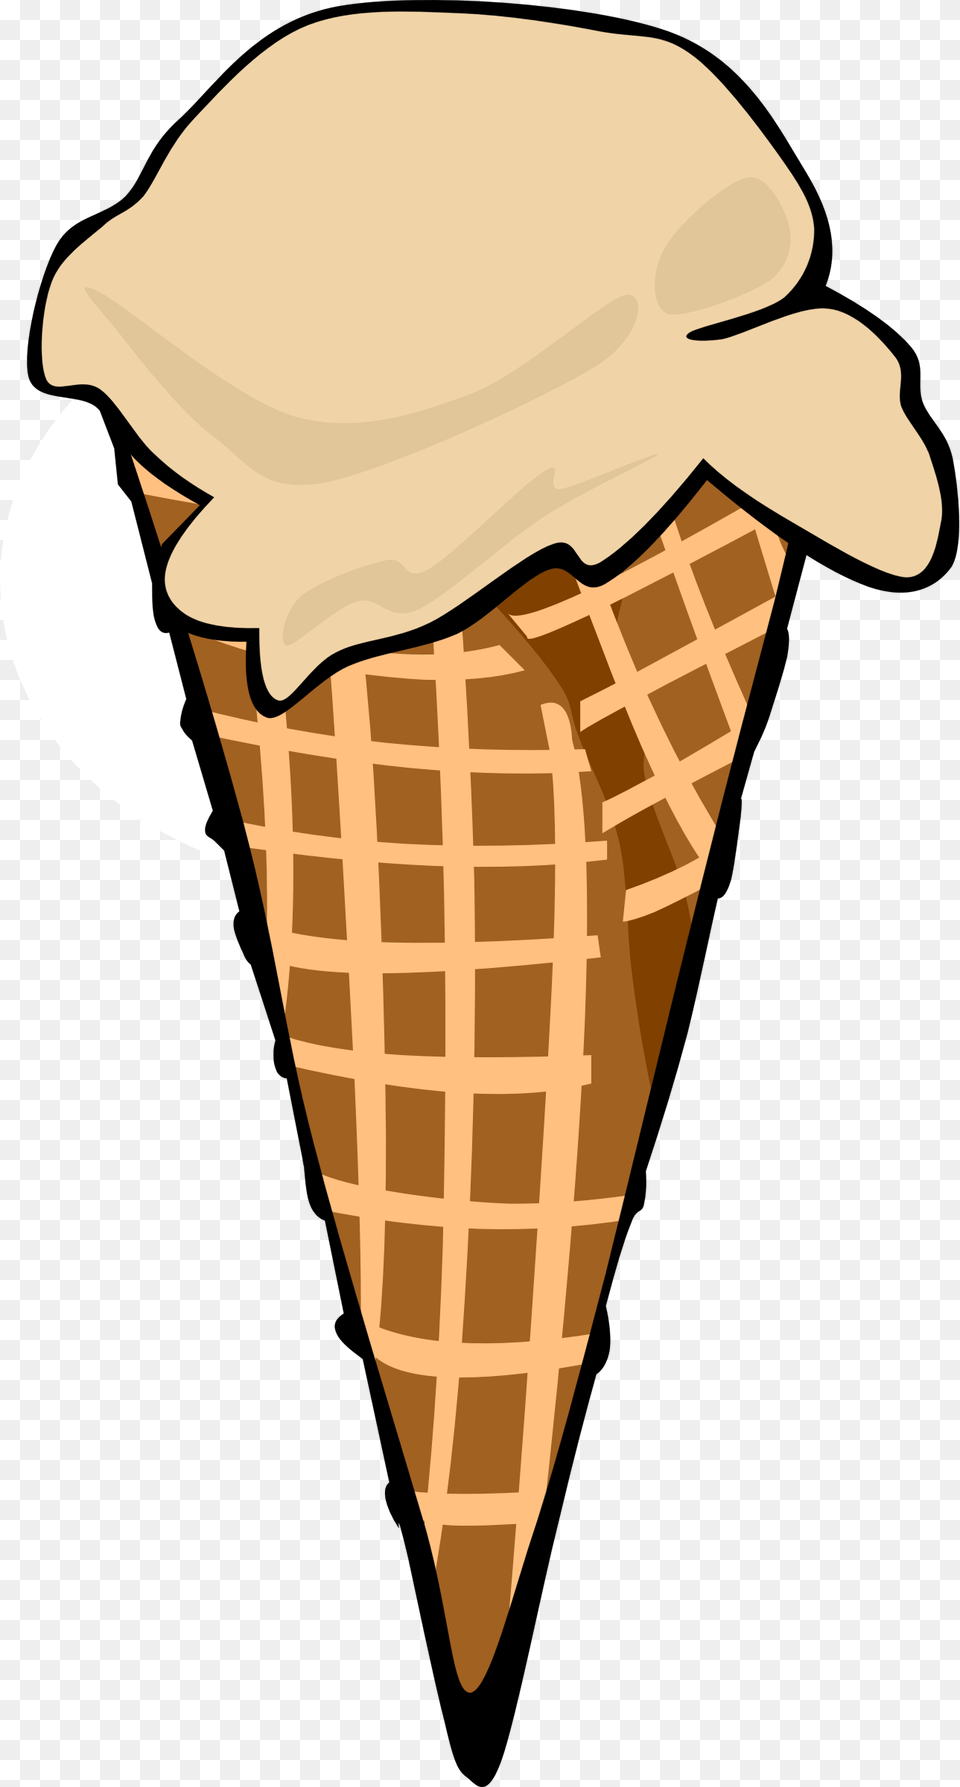 Free Images Of Ice Cream Cones Download Free Clip Art Free Clip, Dessert, Food, Ice Cream Png Image